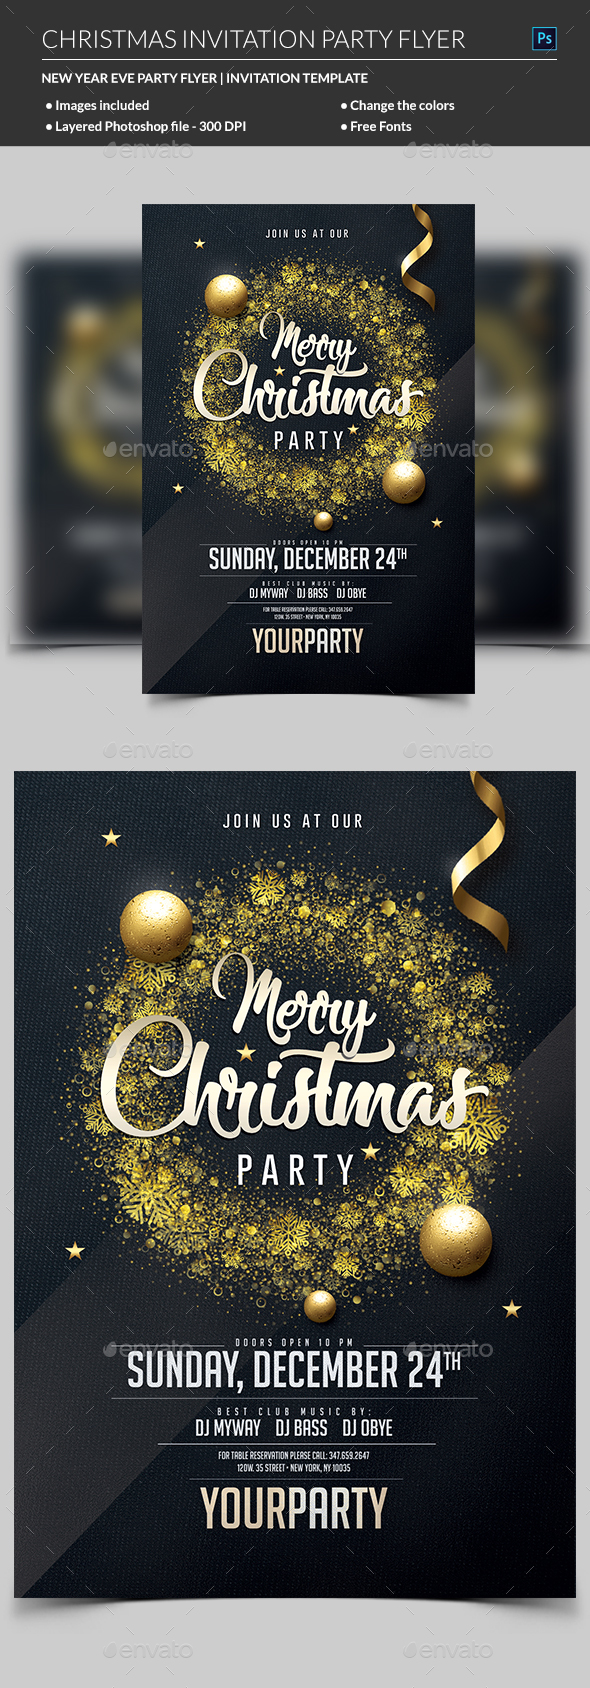 GraphicRiver Christmas Party Invitation 20869387